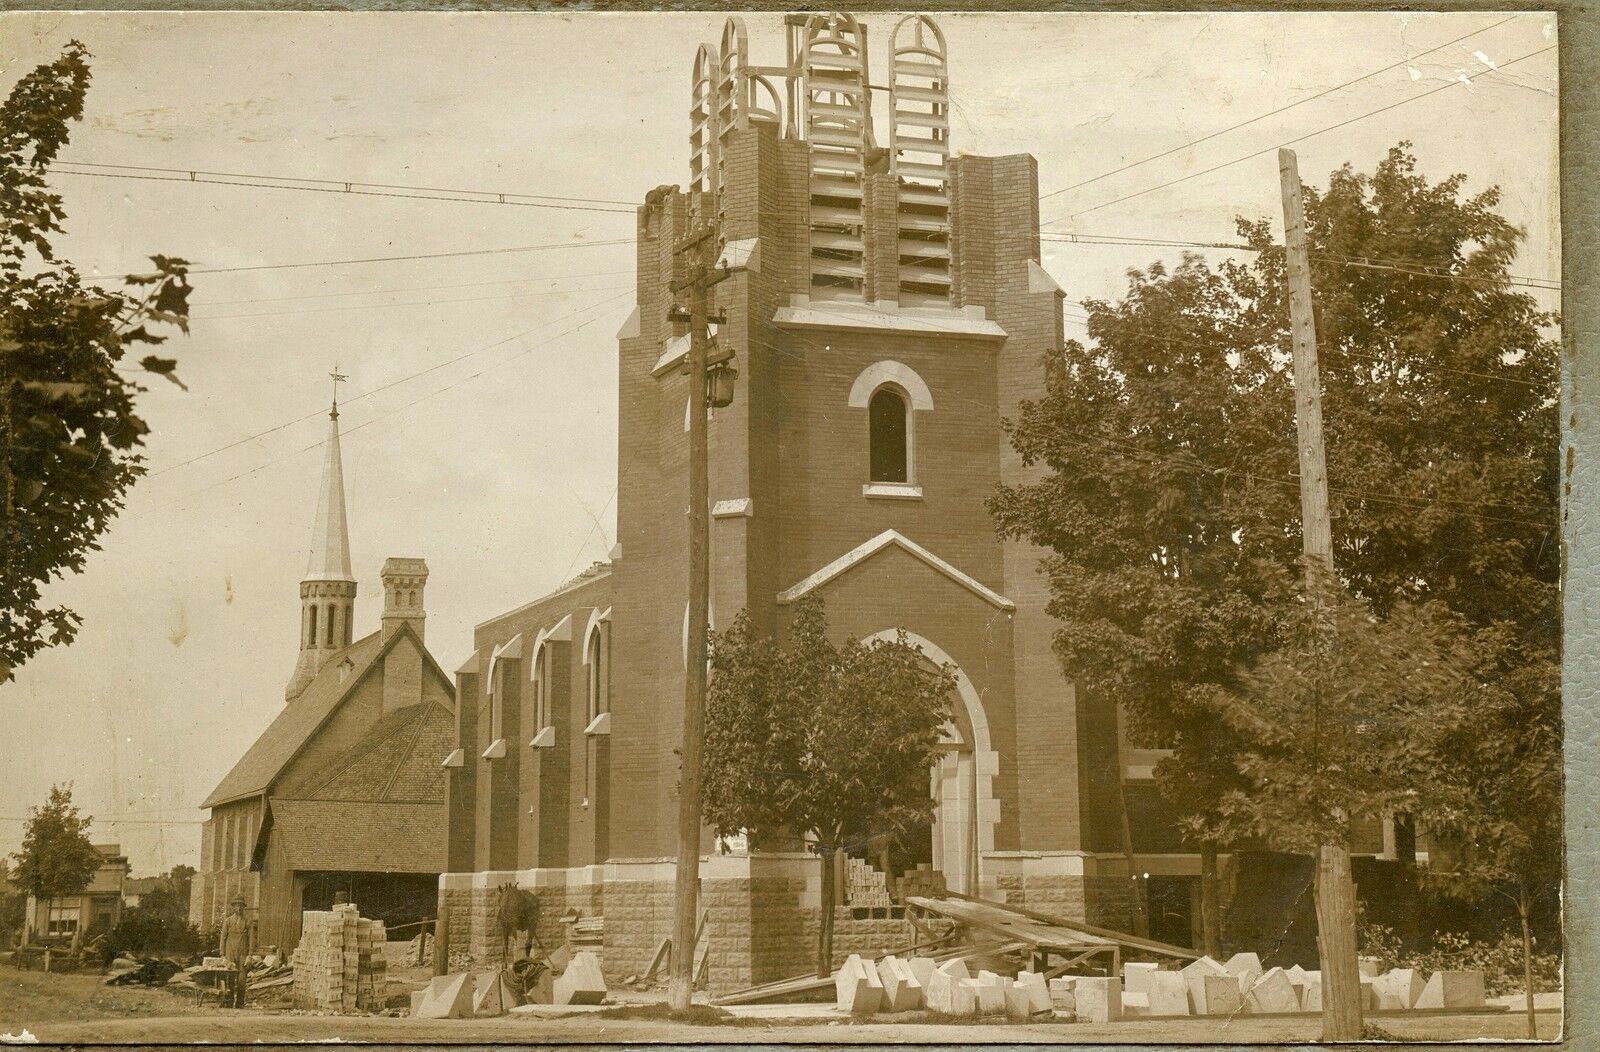 Church under Construction, Vintage Photo, 1914